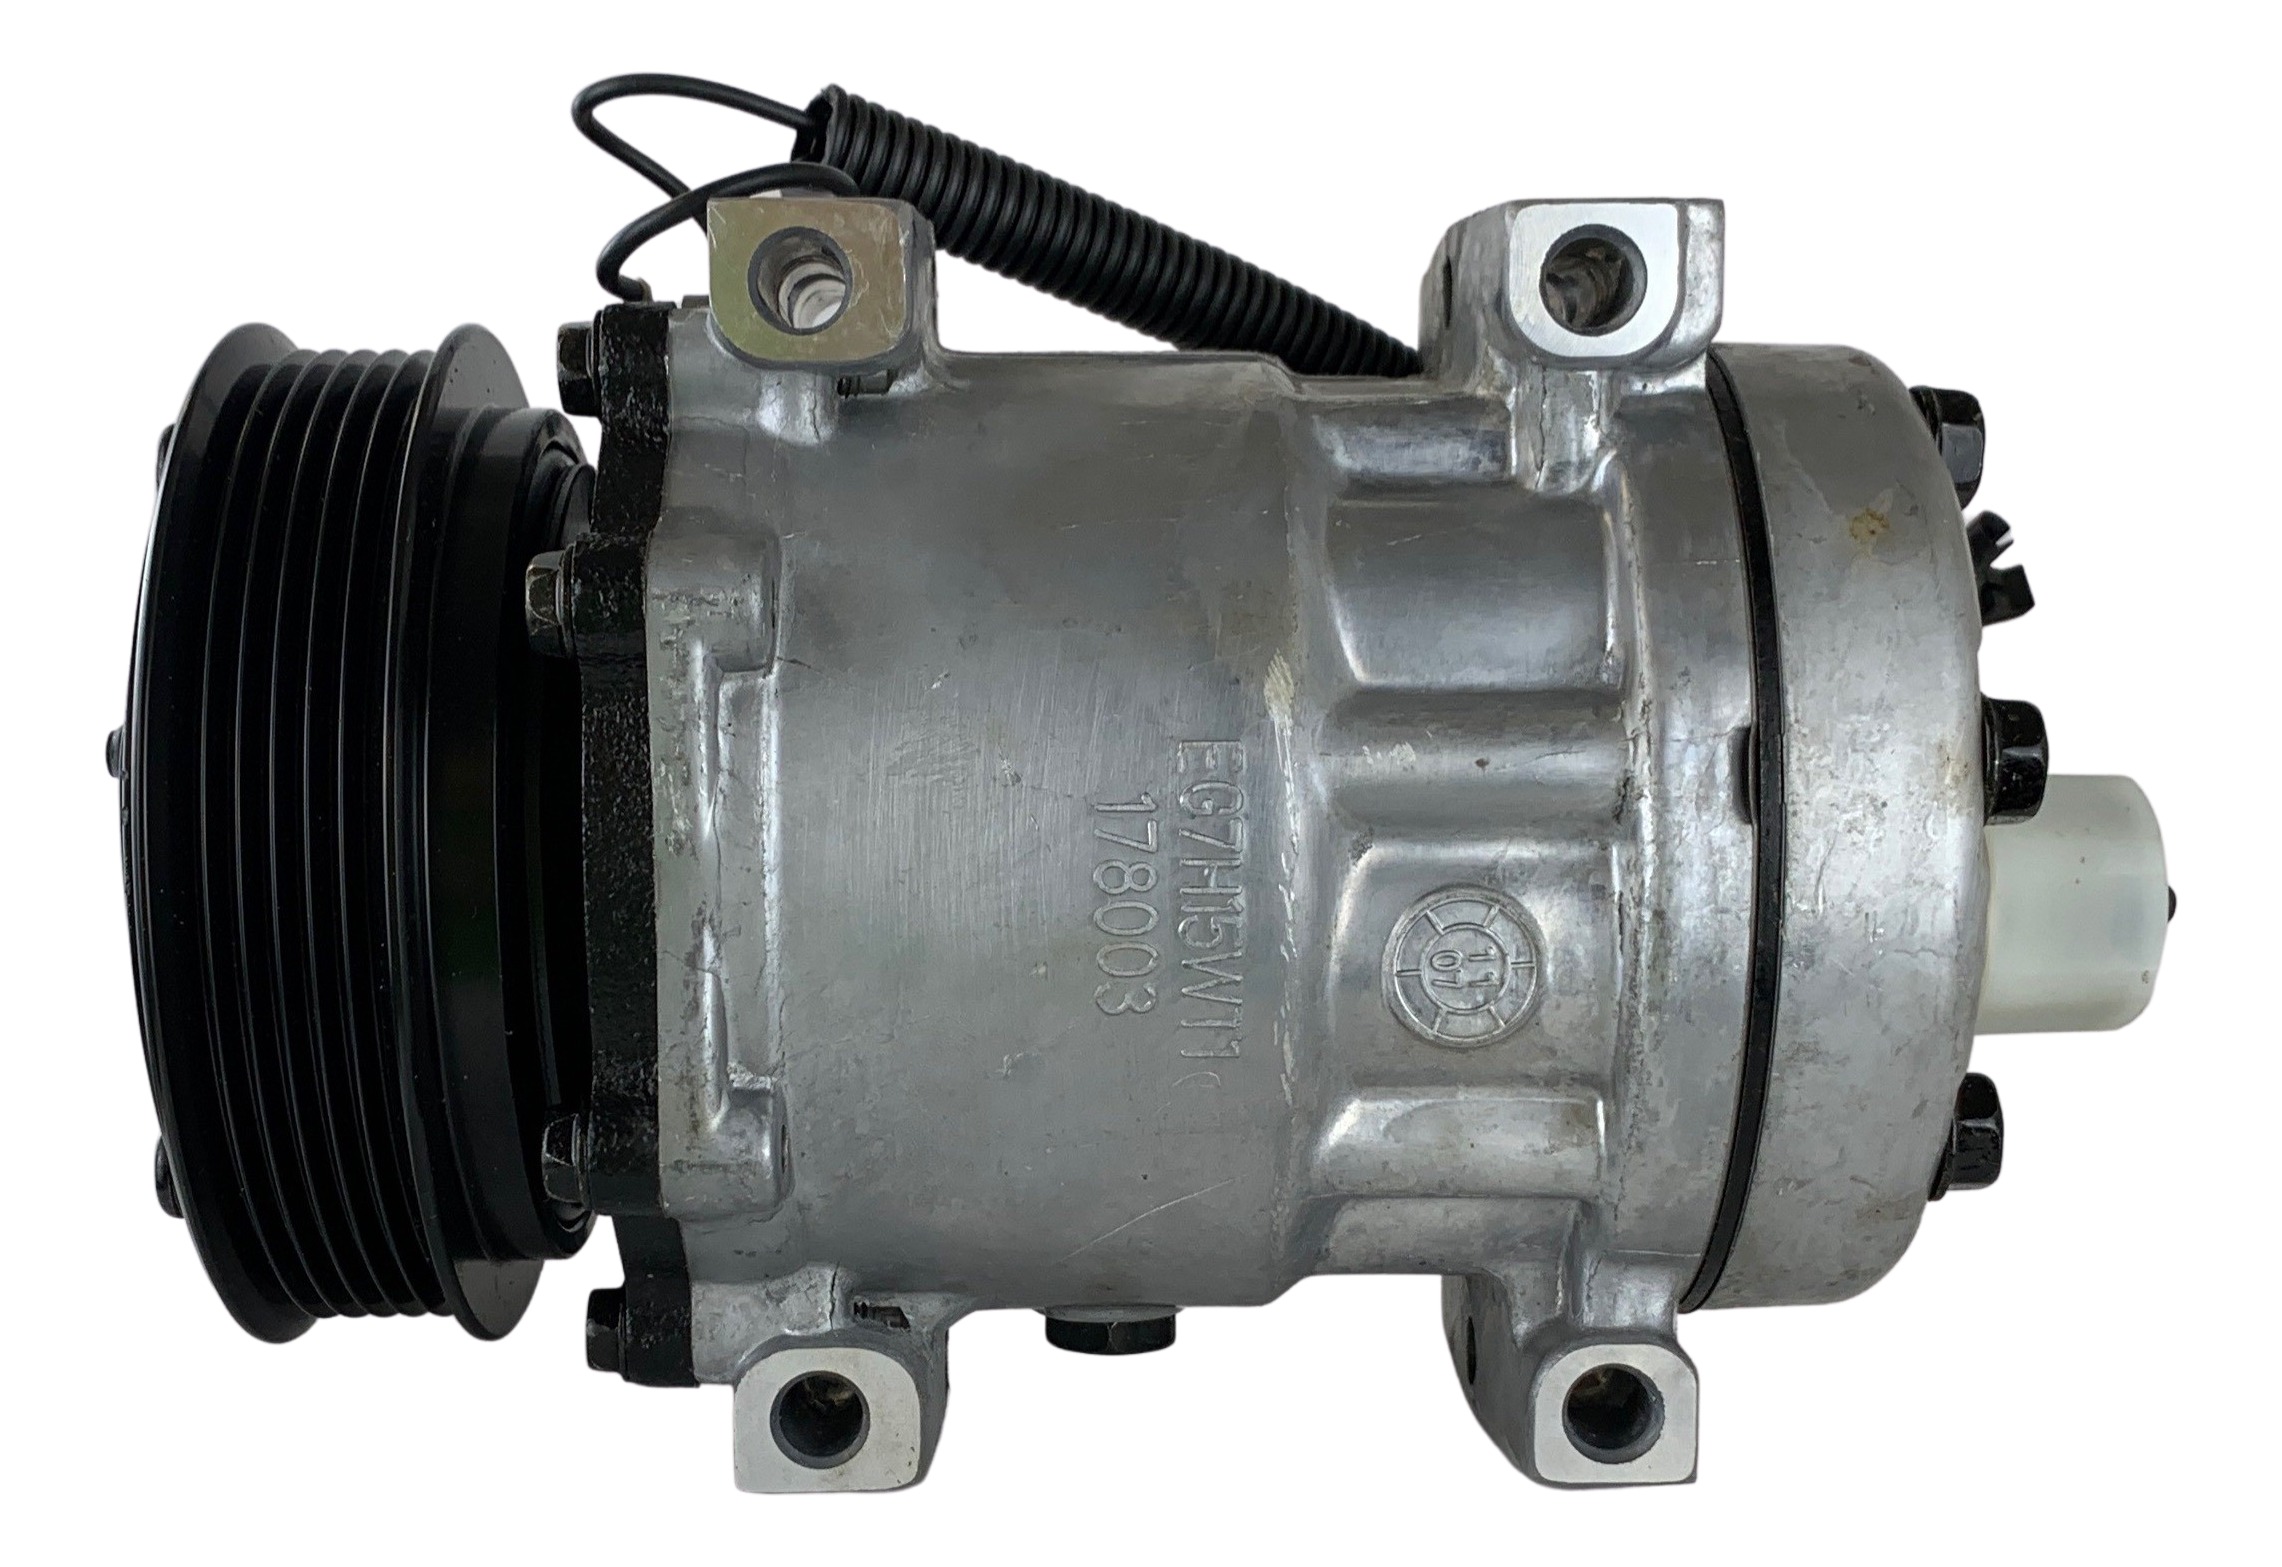 TCW Compressor 40313.601 Remanufactured Product Image field_60b6a13a6e67c